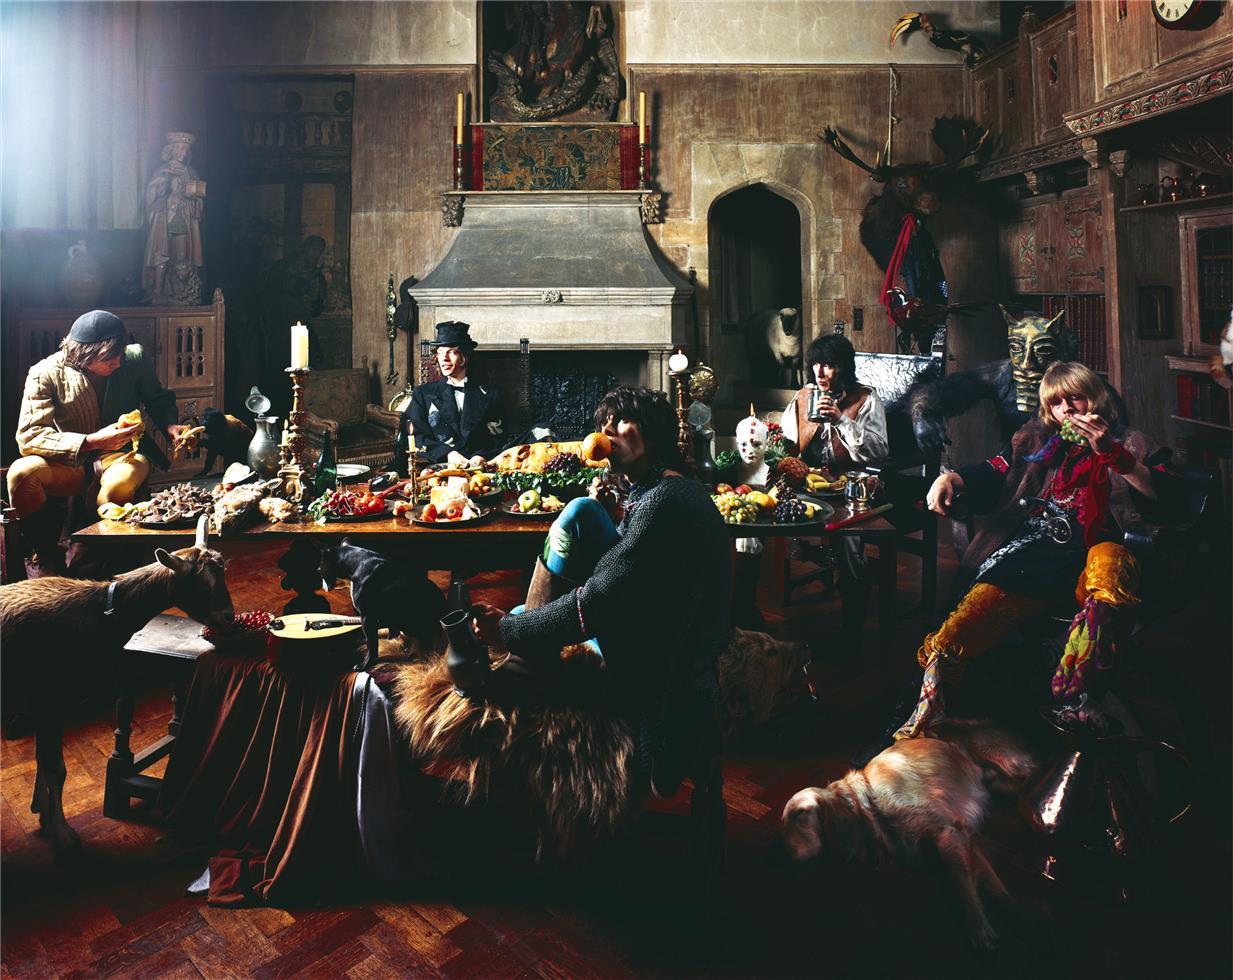 Michael Joseph Color Photograph - Beggars Banquet "Keith Orange" 1968